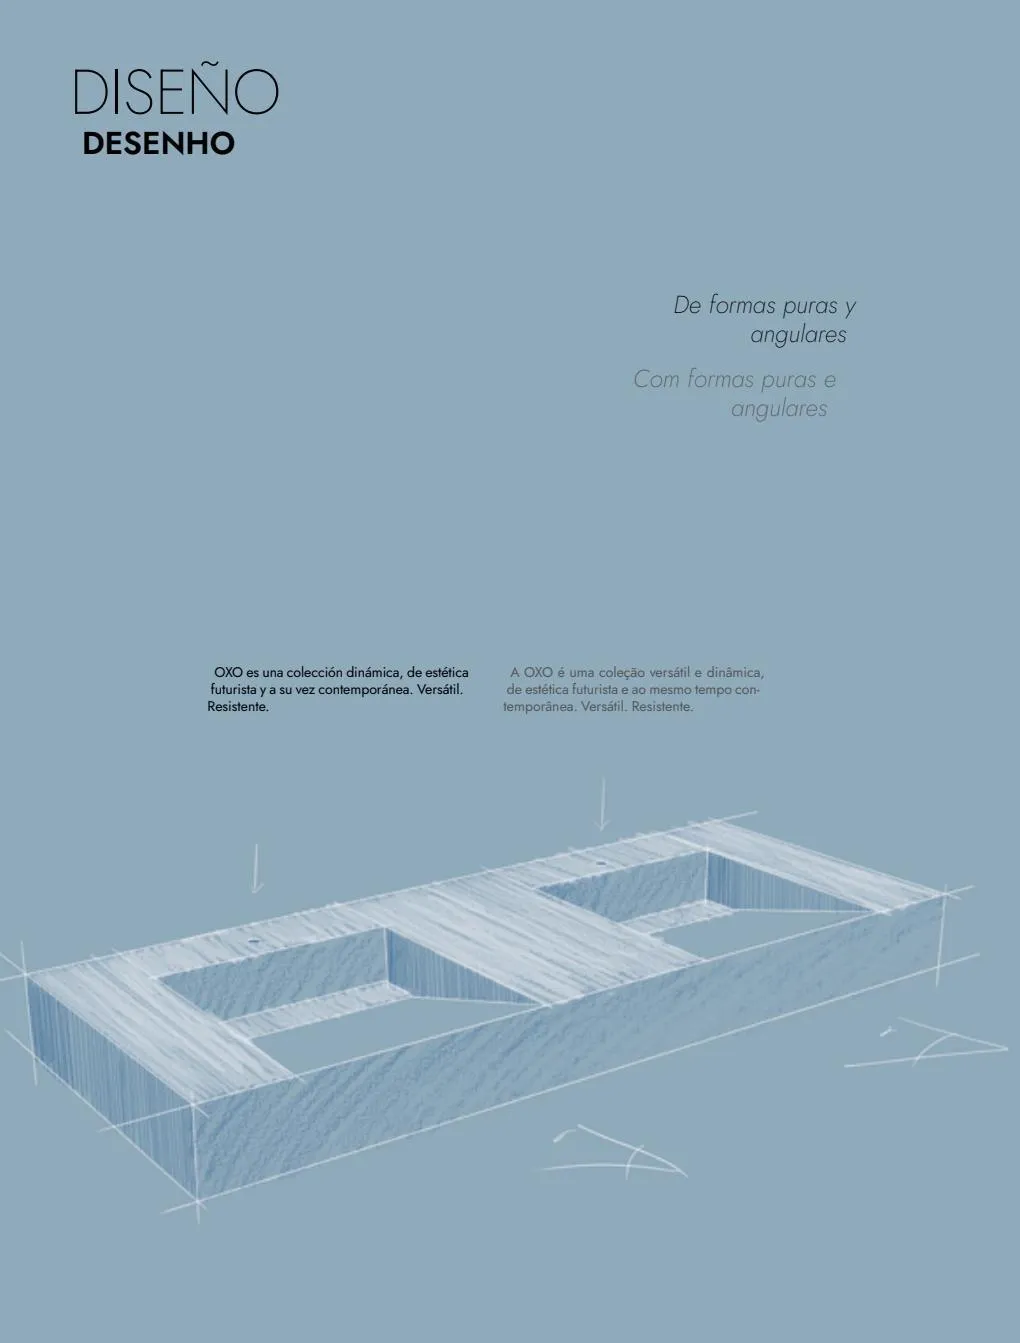 Catalogue Catalogue Porcelanosa, page 00004